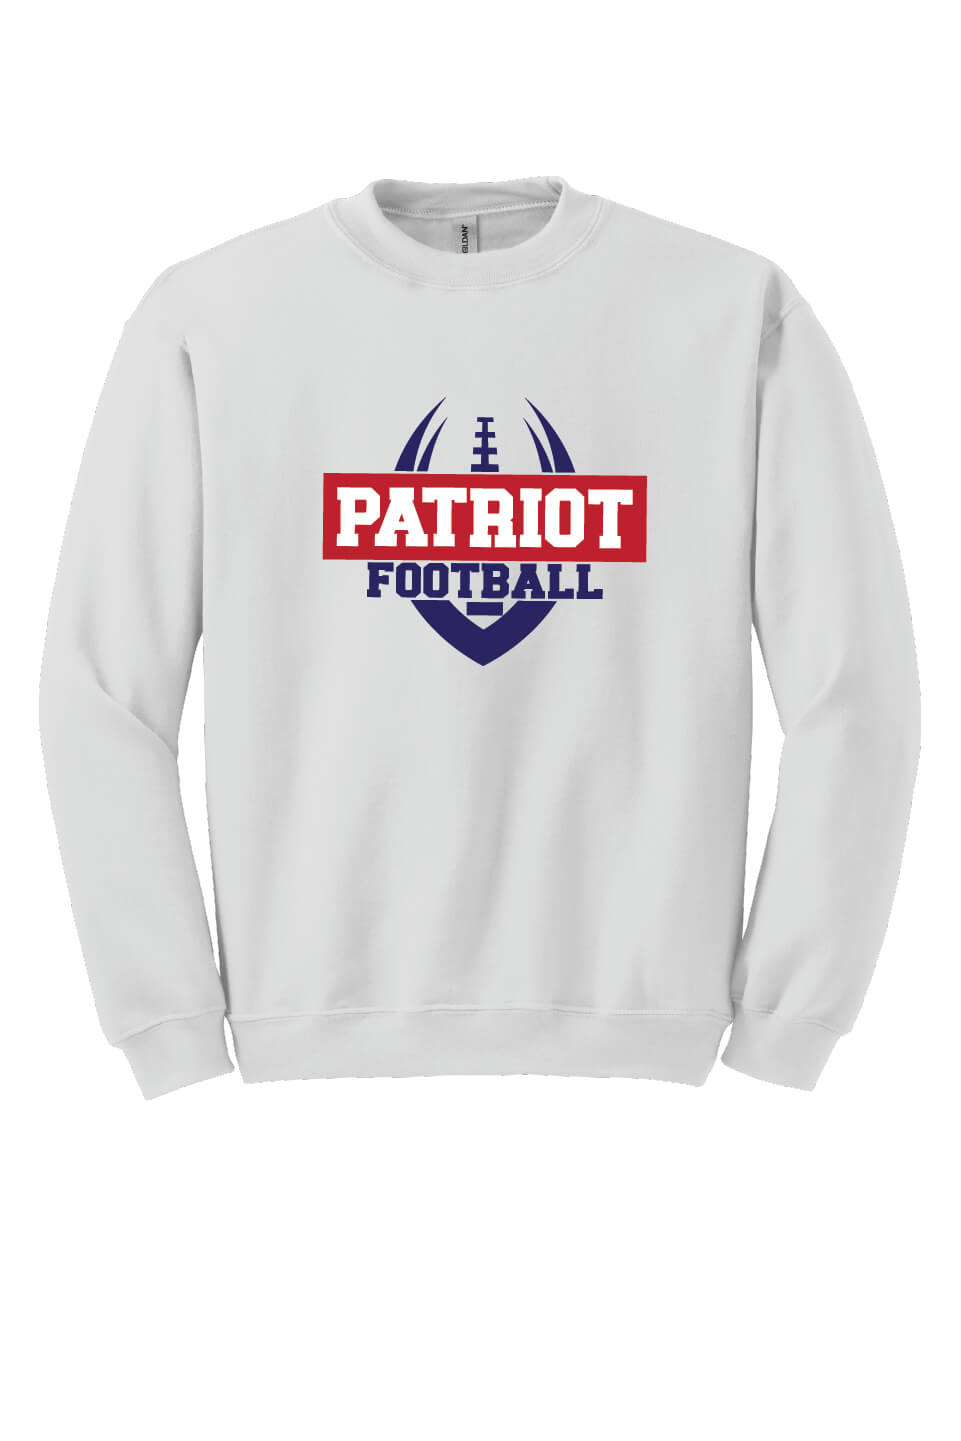 Patriot Football Crewneck Sweatshirt white